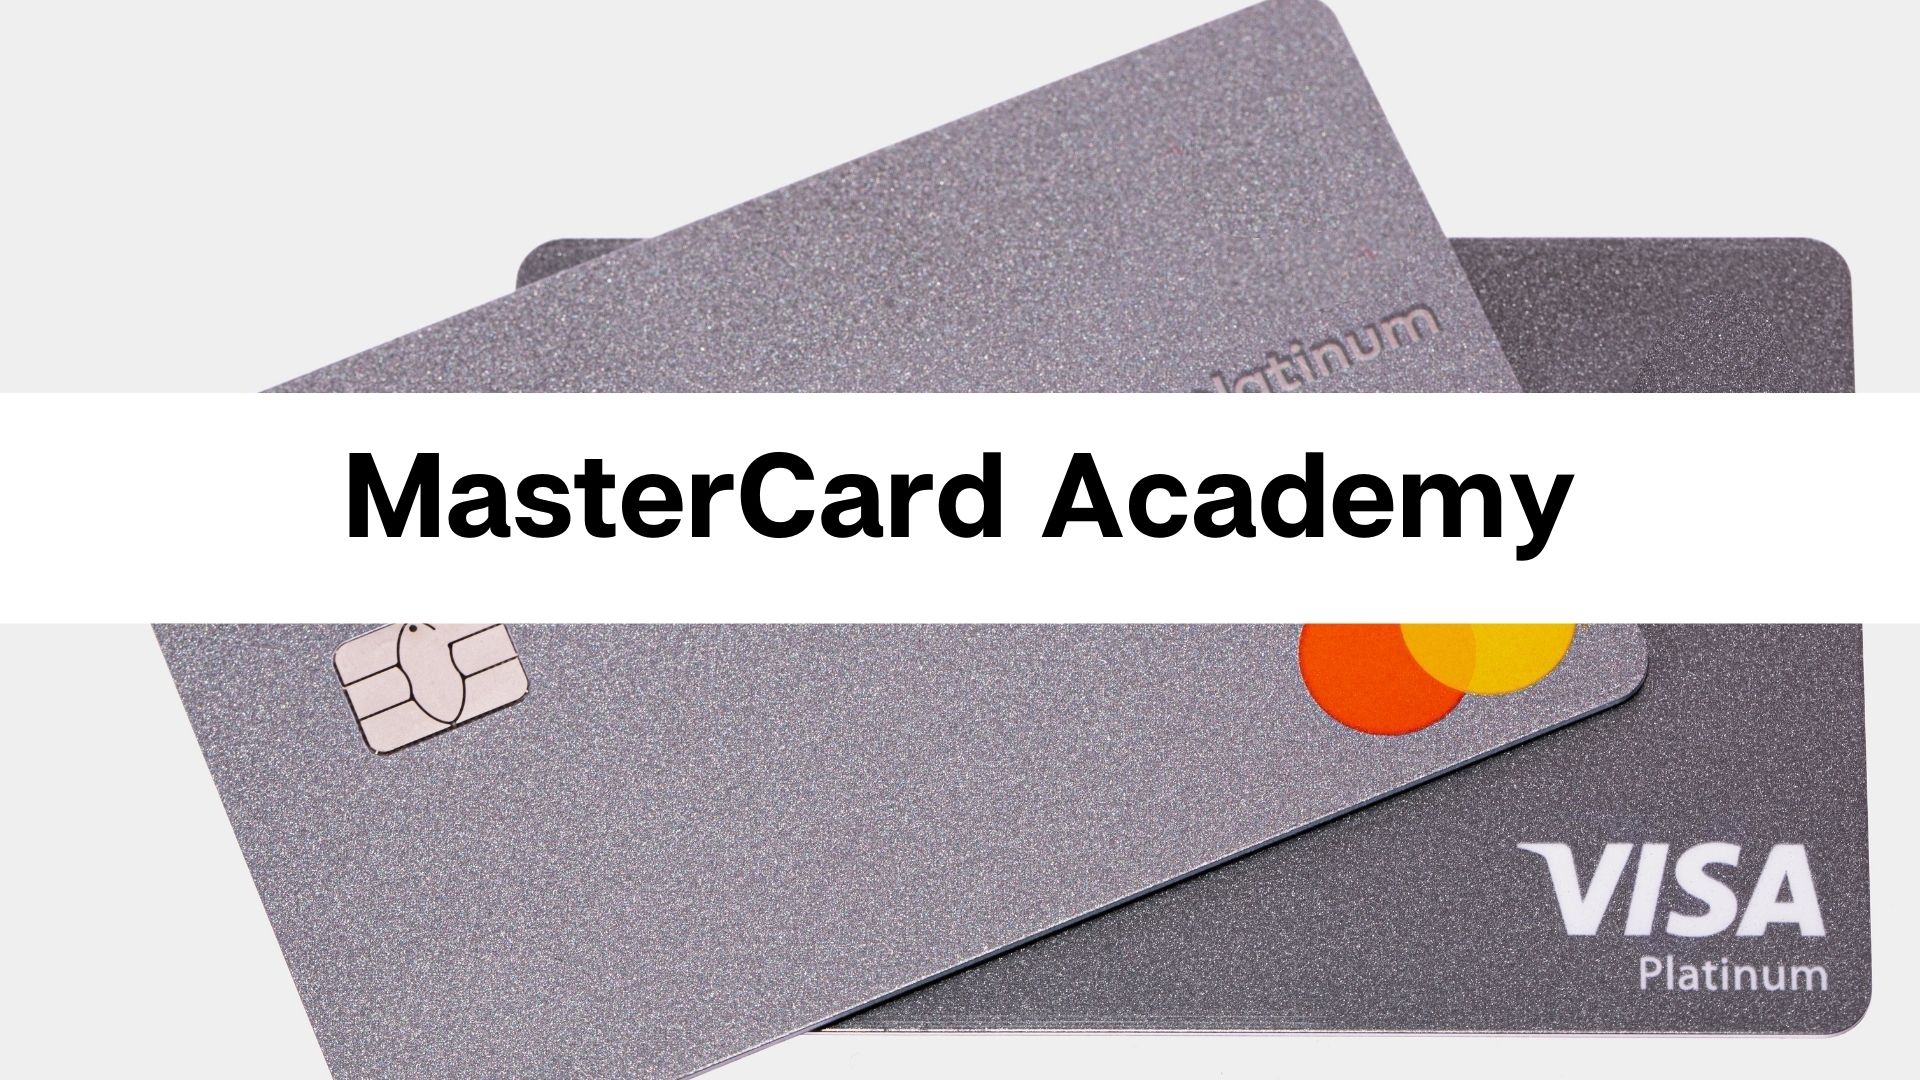 https://www.groundlabs.com/wp-content/uploads/2014/08/MasterCard-Academy.jpg